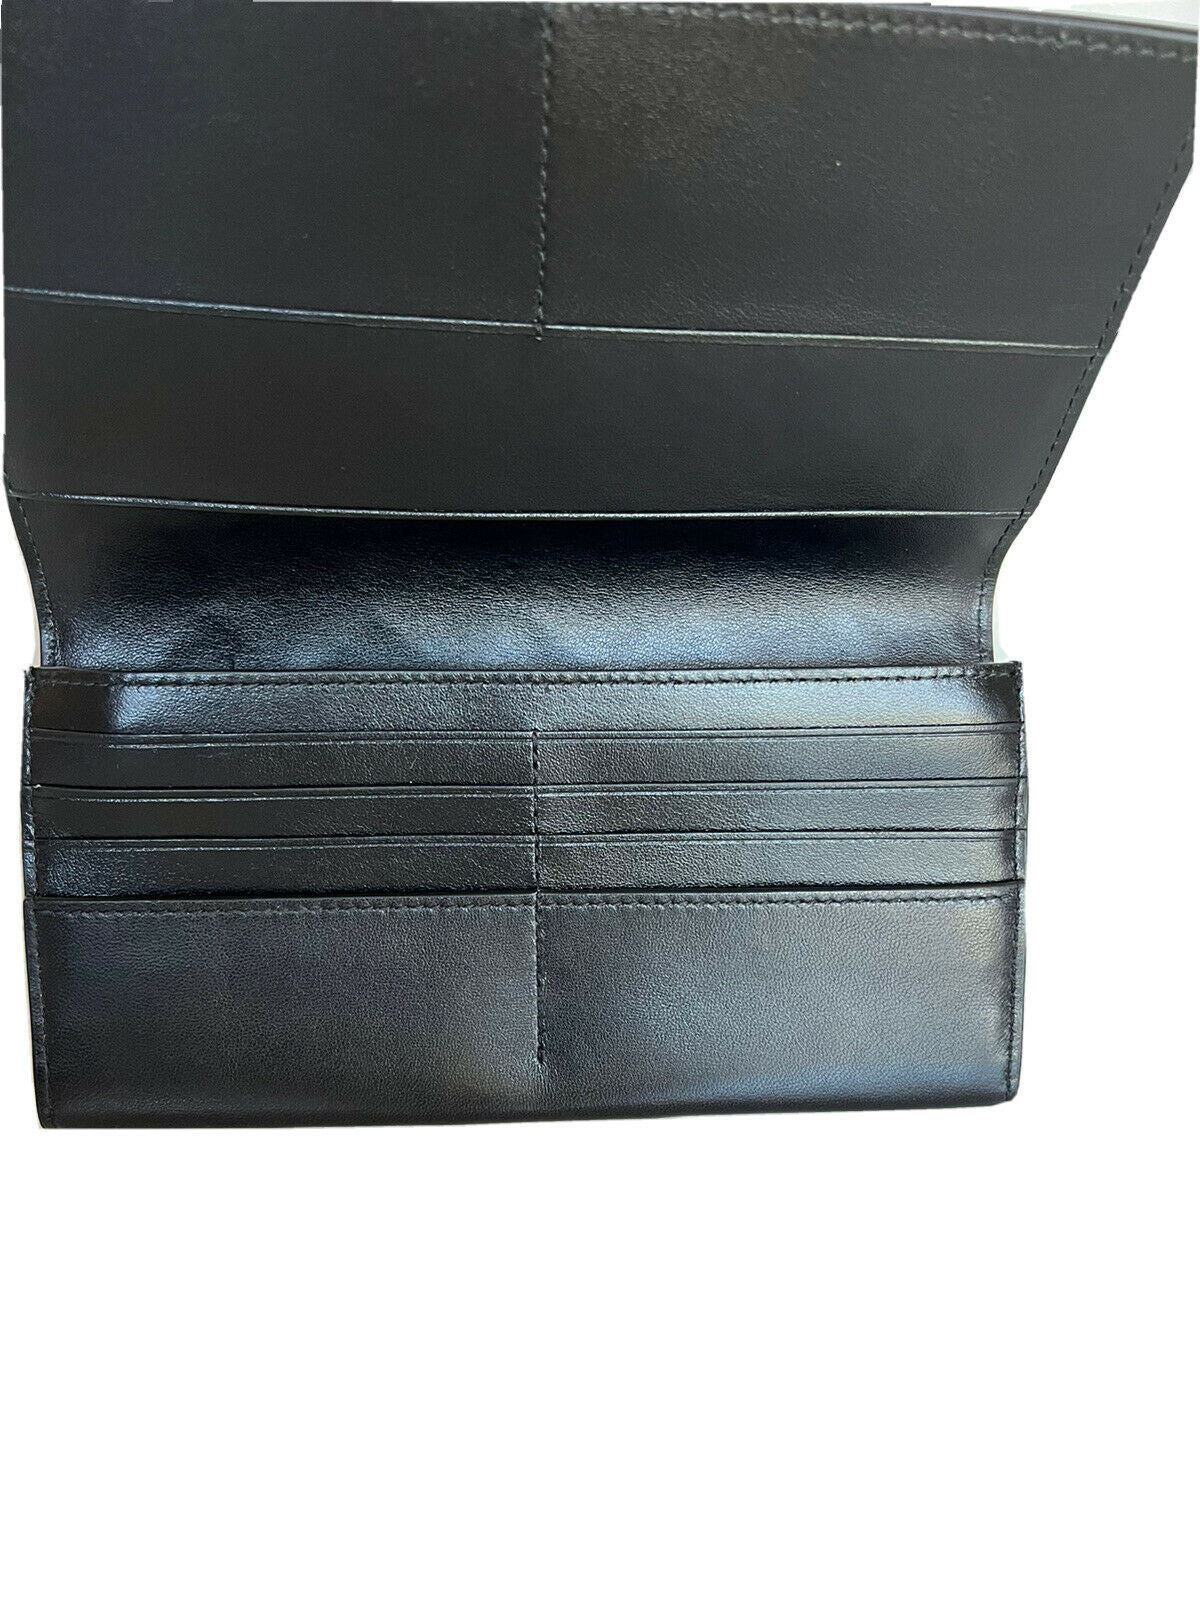 NWT $760 Bottega Veneta Nappa19 Leather Card Holder Wallet Black 591365 Italy